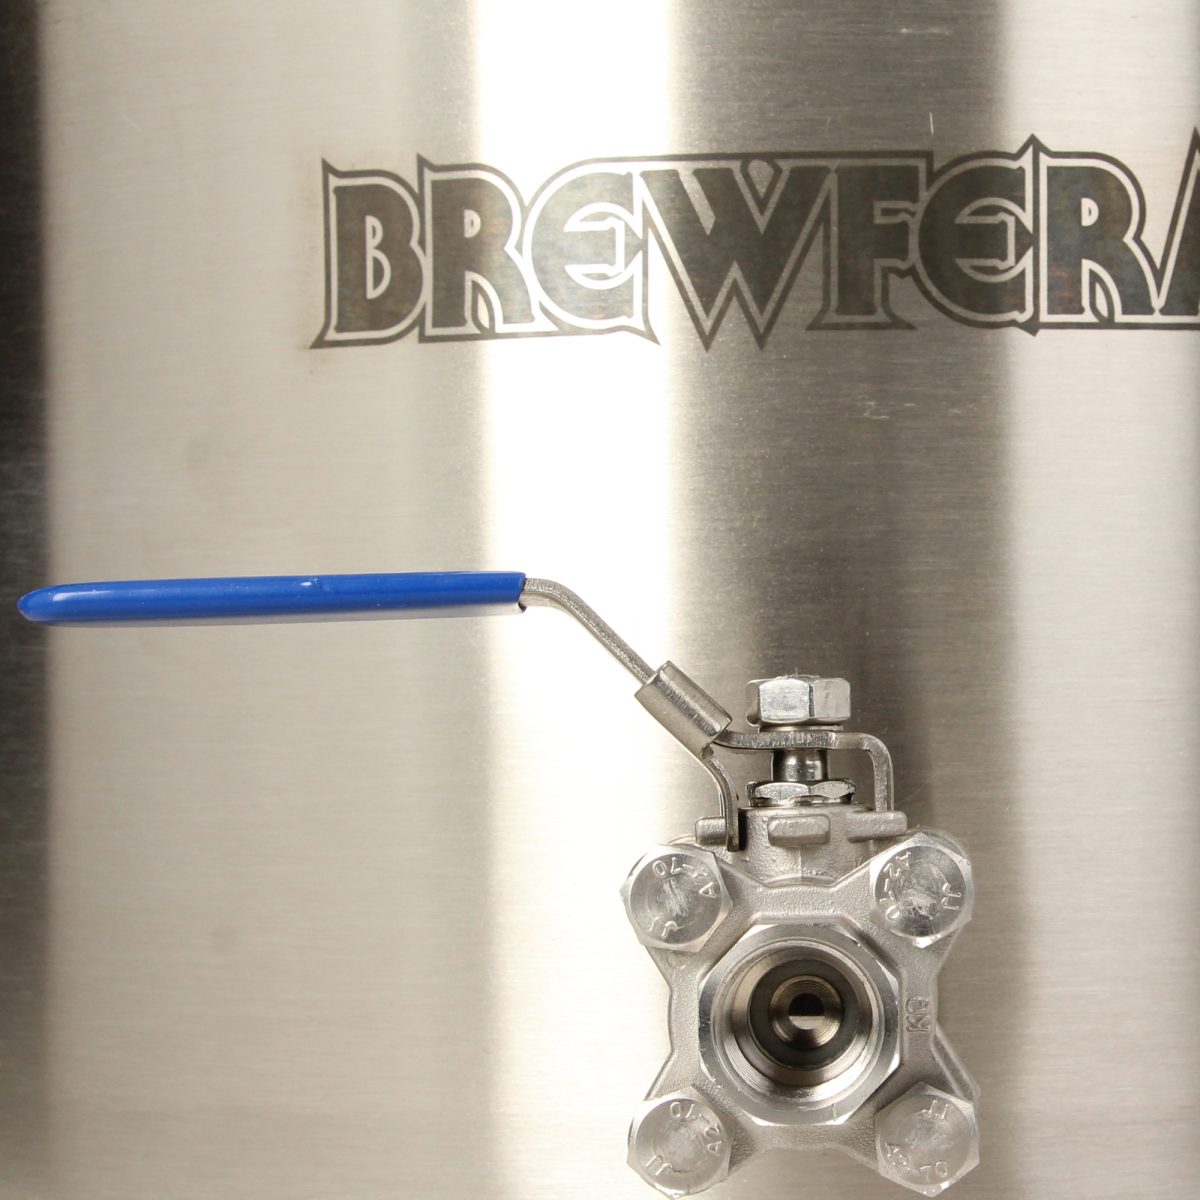 Brewferm homebrew kettle SST 20 l with ball valve (36 x 24 cm)